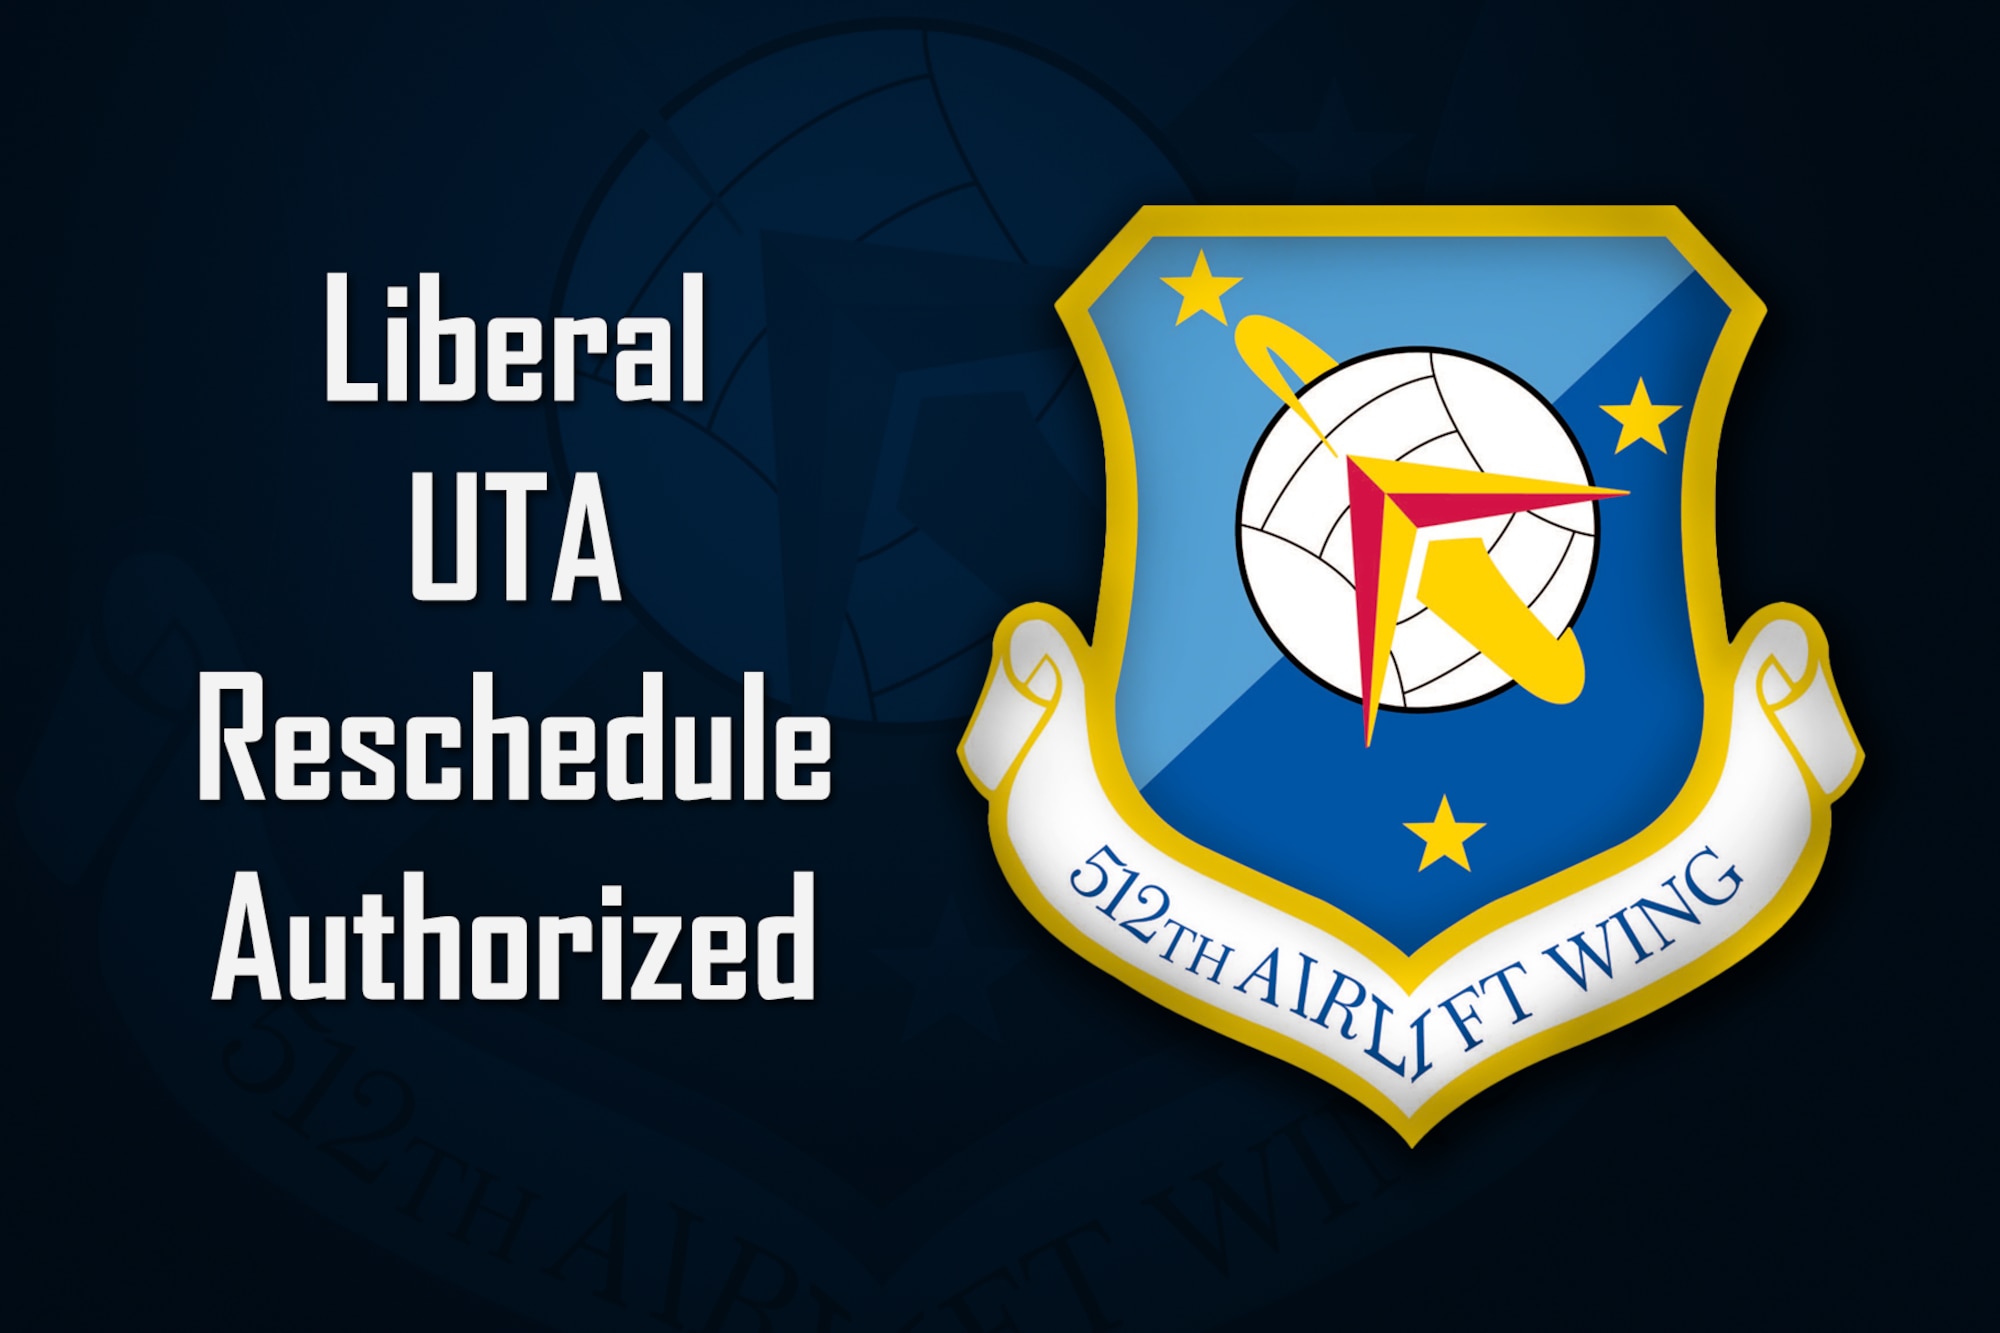 Liberal UTA Reschedule Authorized